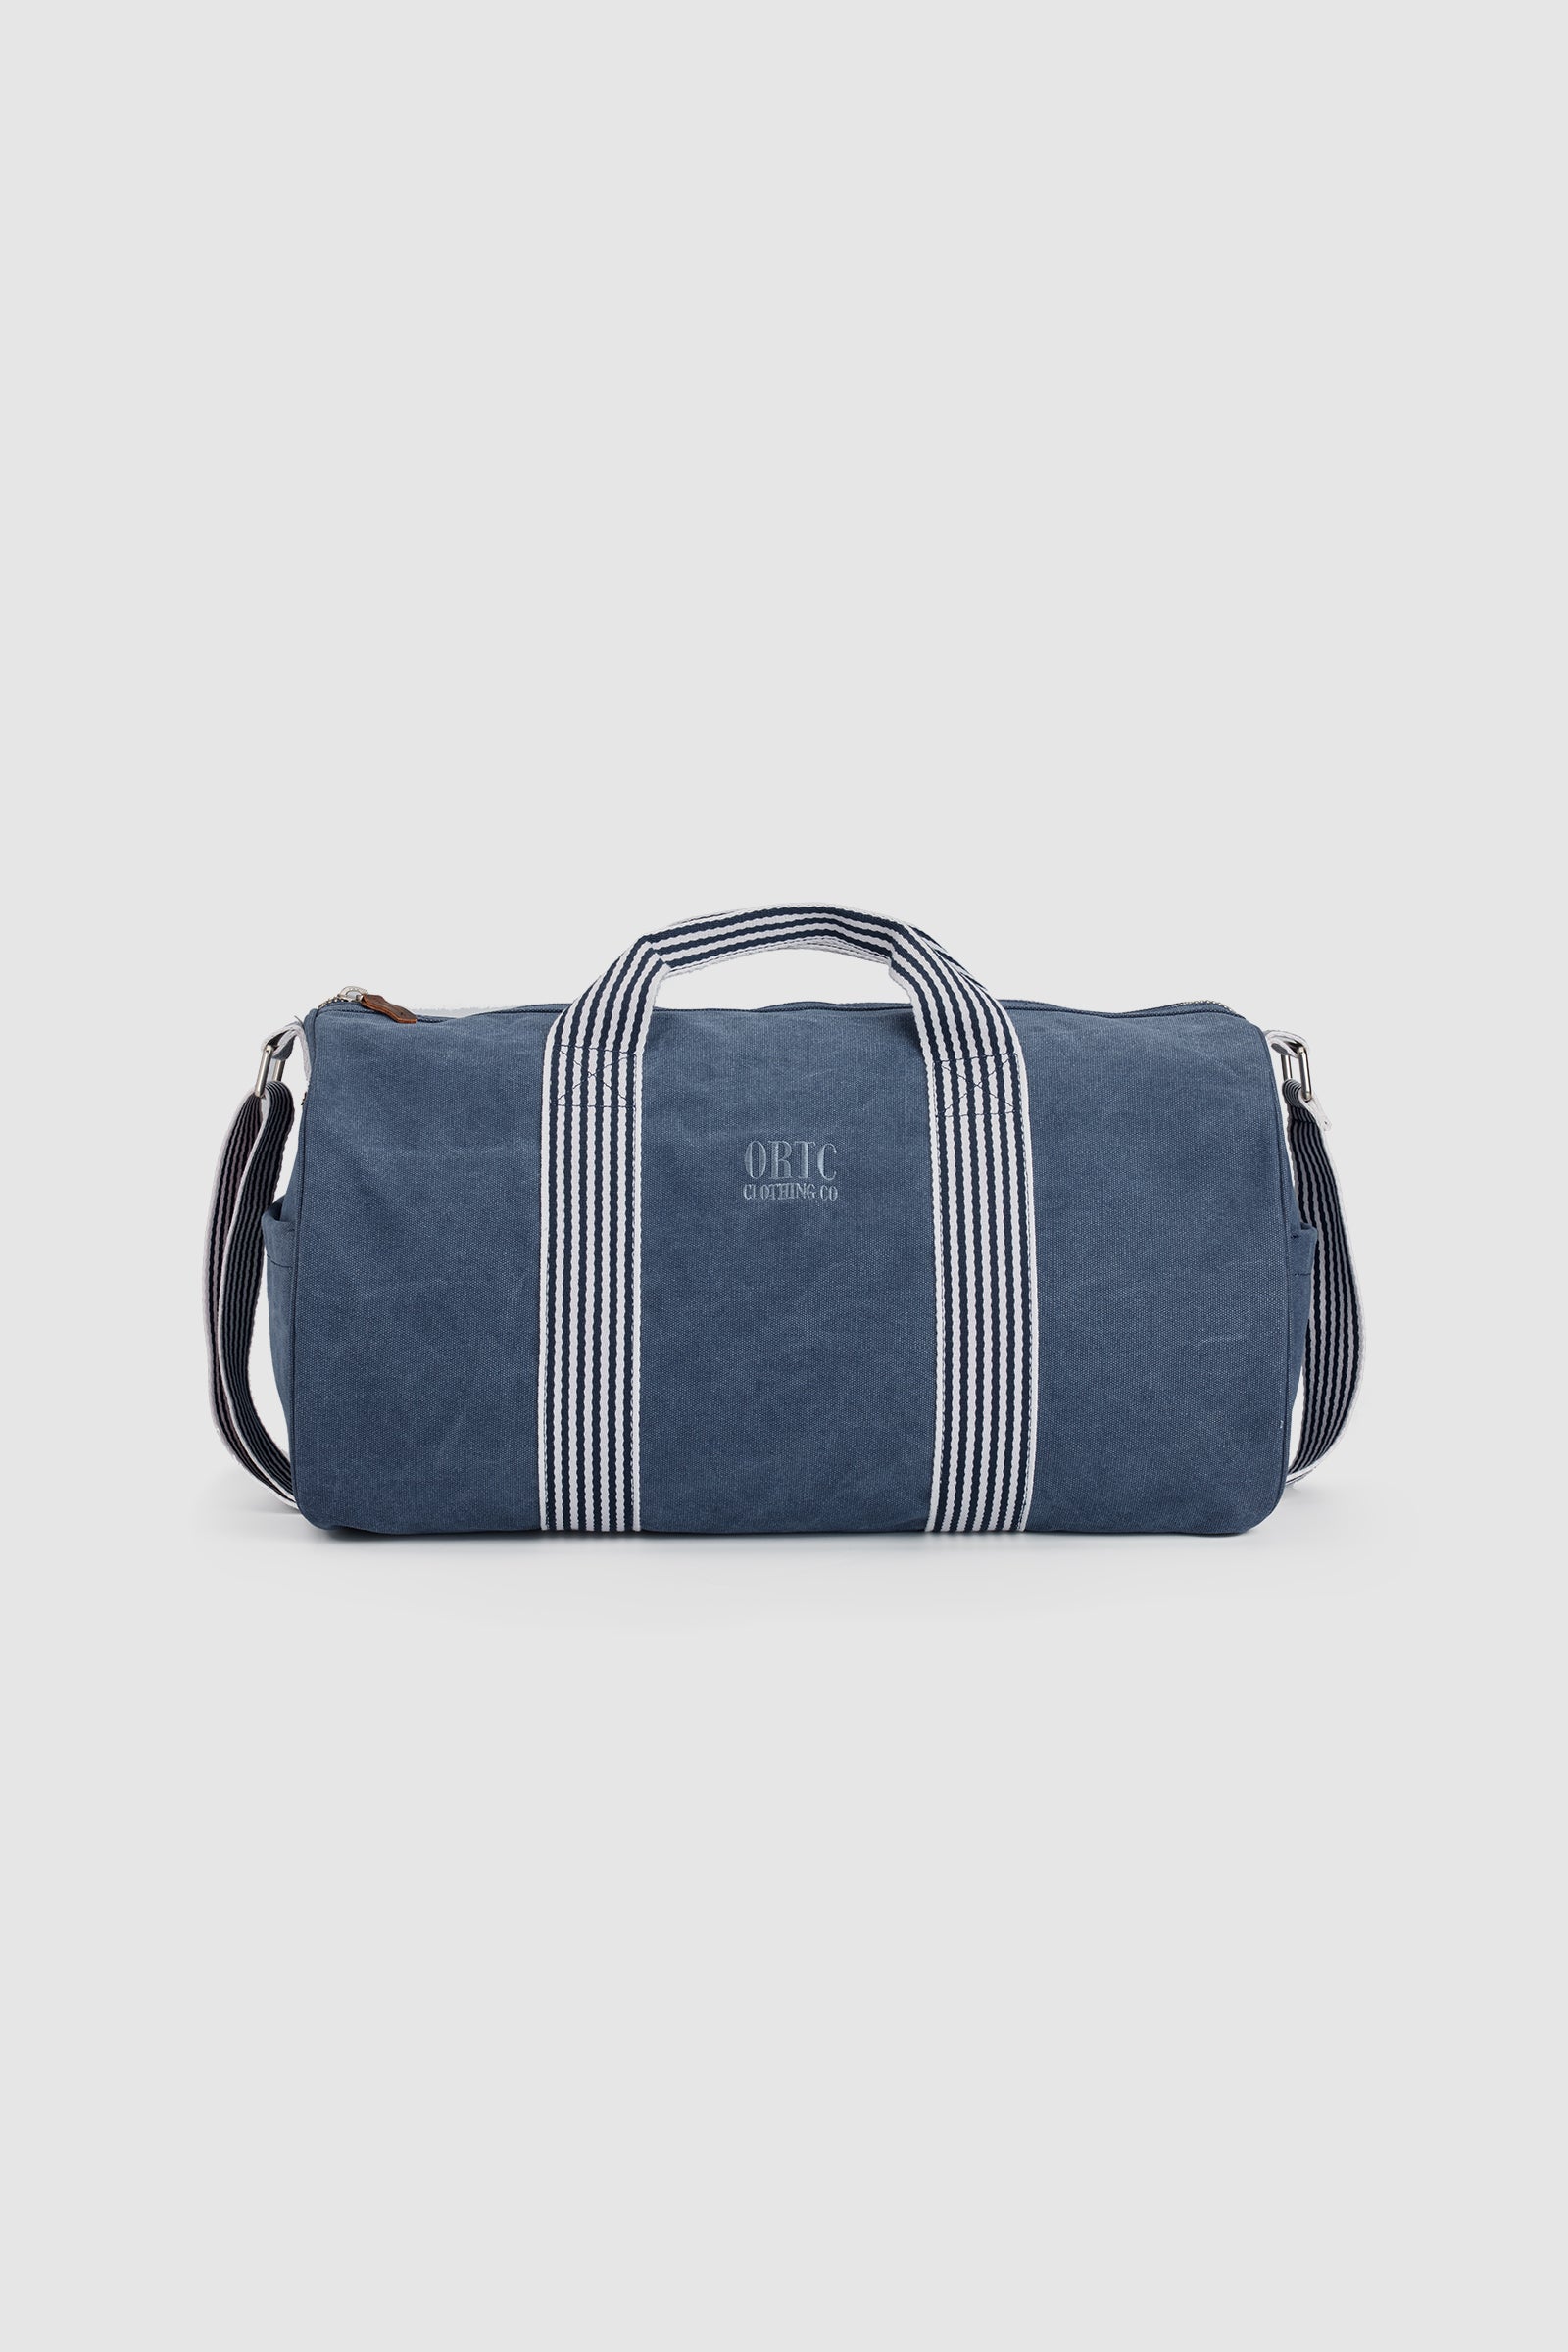 Premium Cotton Canvas Travel Duffle Bag - Versatile Elegance